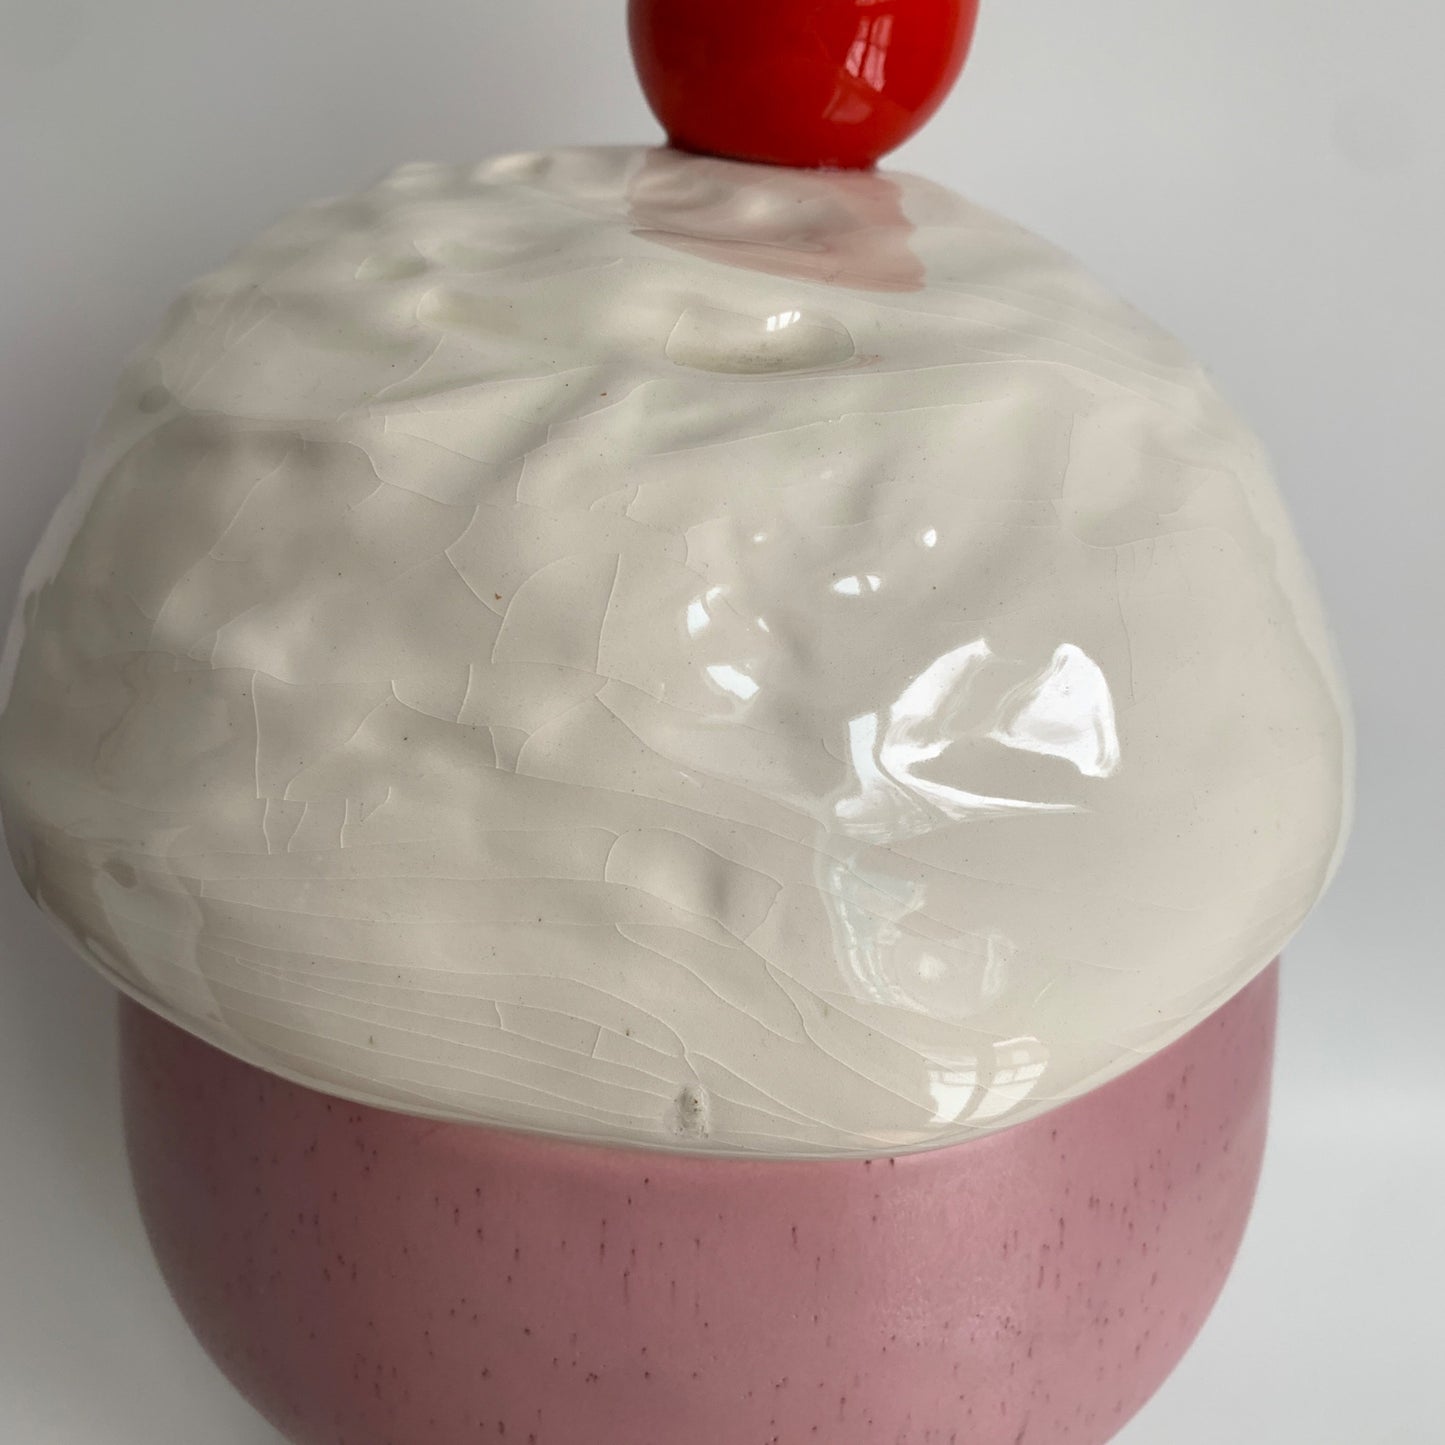 ADORABLE Vintage Milkshake Cookie Jar with Cherry 13" Tall